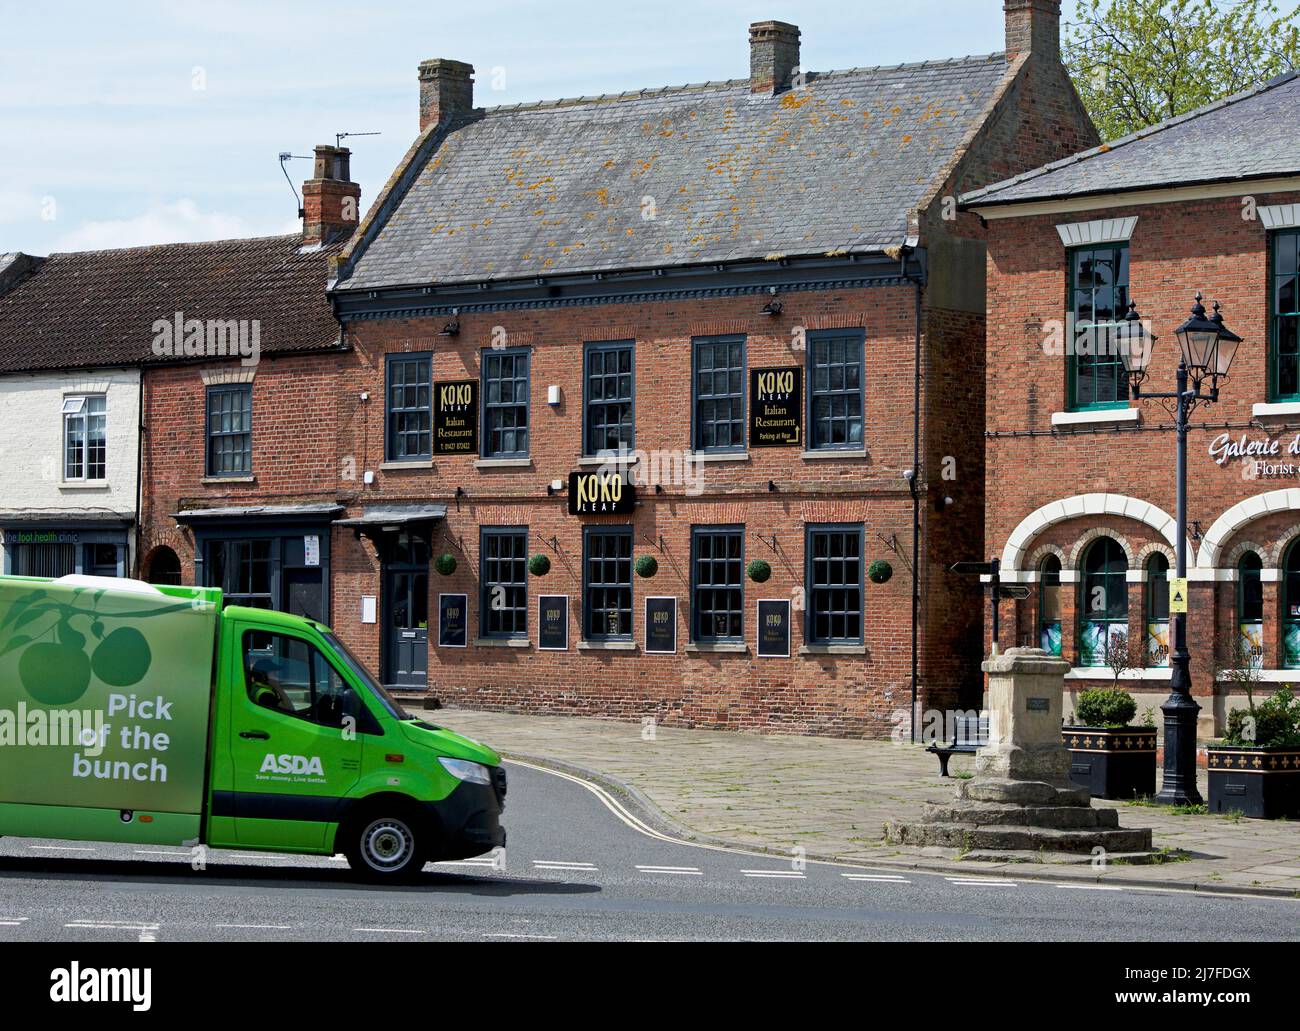 ASDA delivery van in Epworth, North Lincolnshire, England UK Stock Photo